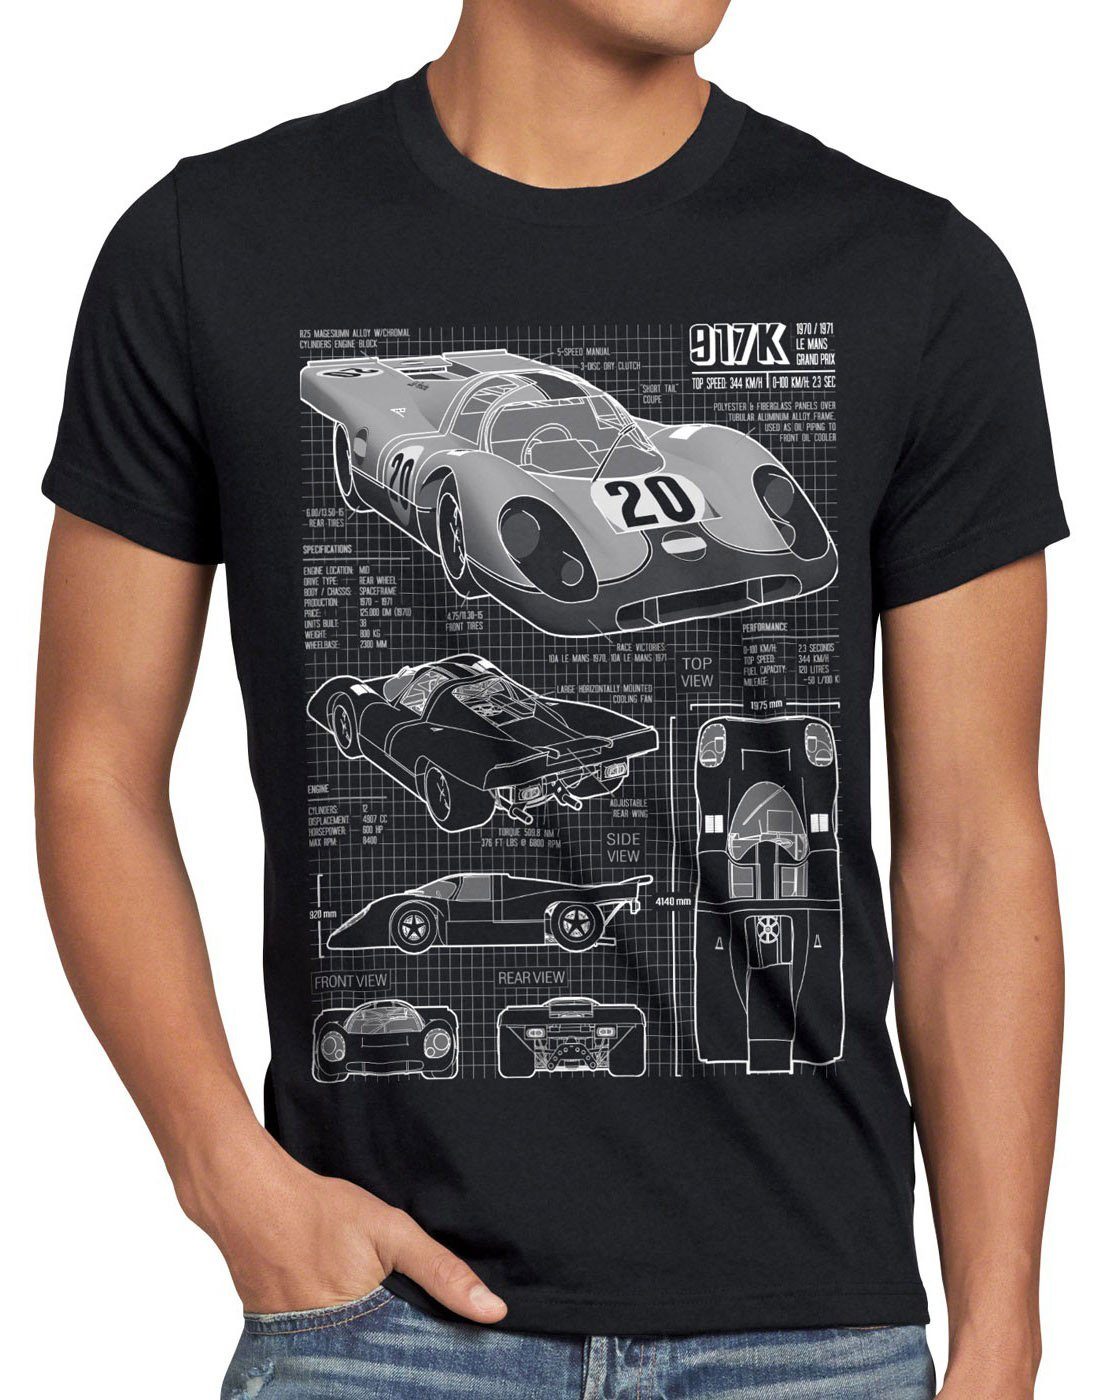 style3 Print-Shirt Herren T-Shirt 917K Le Mans 24stunden rennen 997 996 gt2 918 914 916 924 mcqueen schwarz